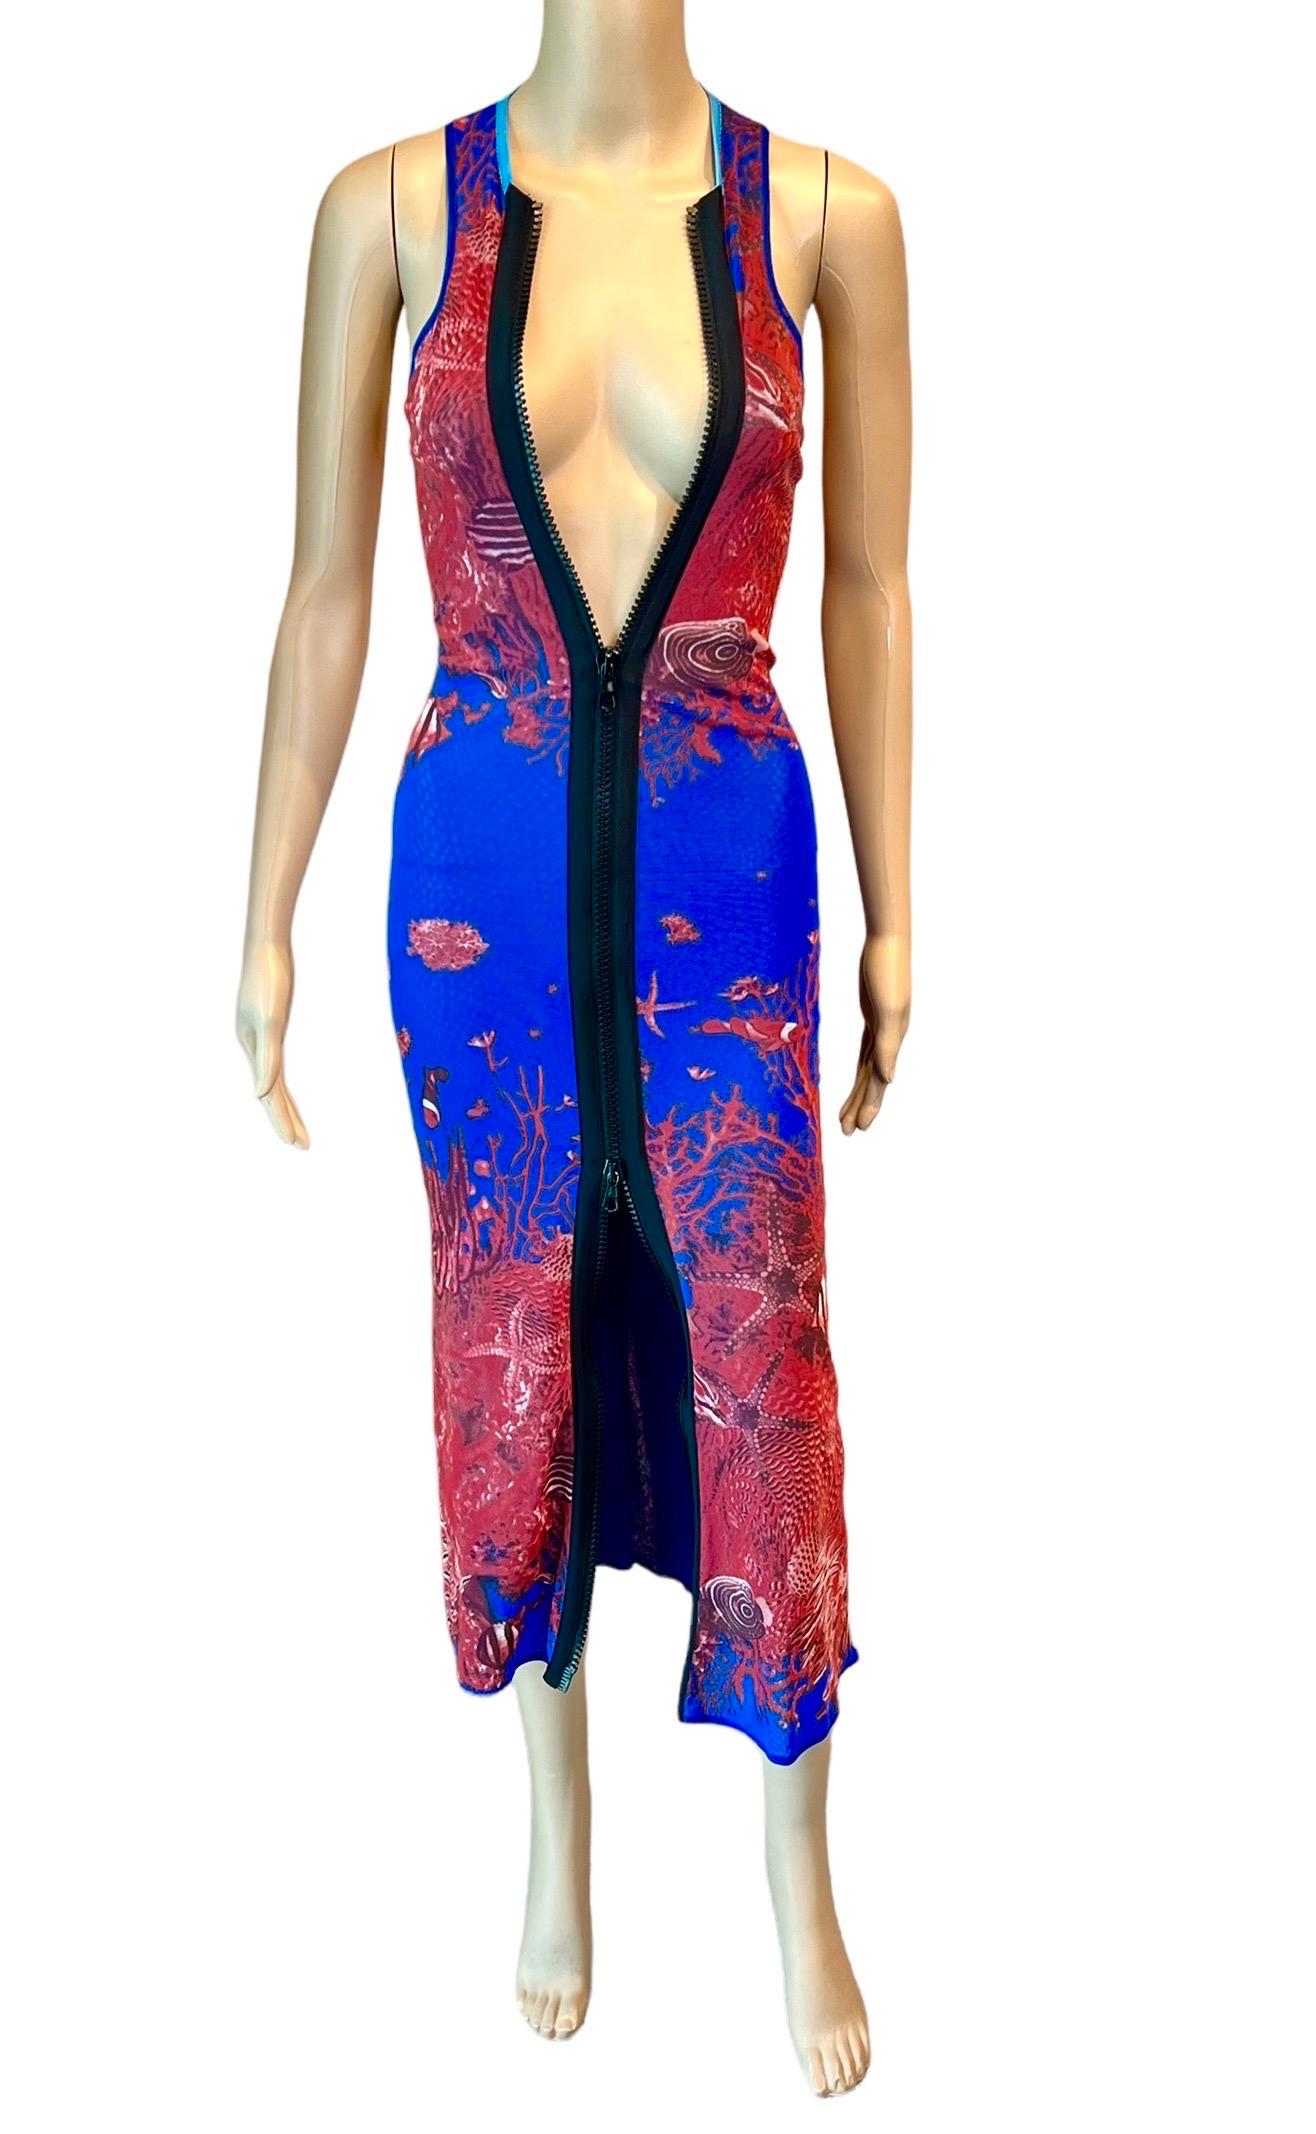 Jean Paul Gaultier Soleil S/S 1999 Sea Life Print Bodycon Zipper Mesh Maxi Dress In Good Condition For Sale In Naples, FL